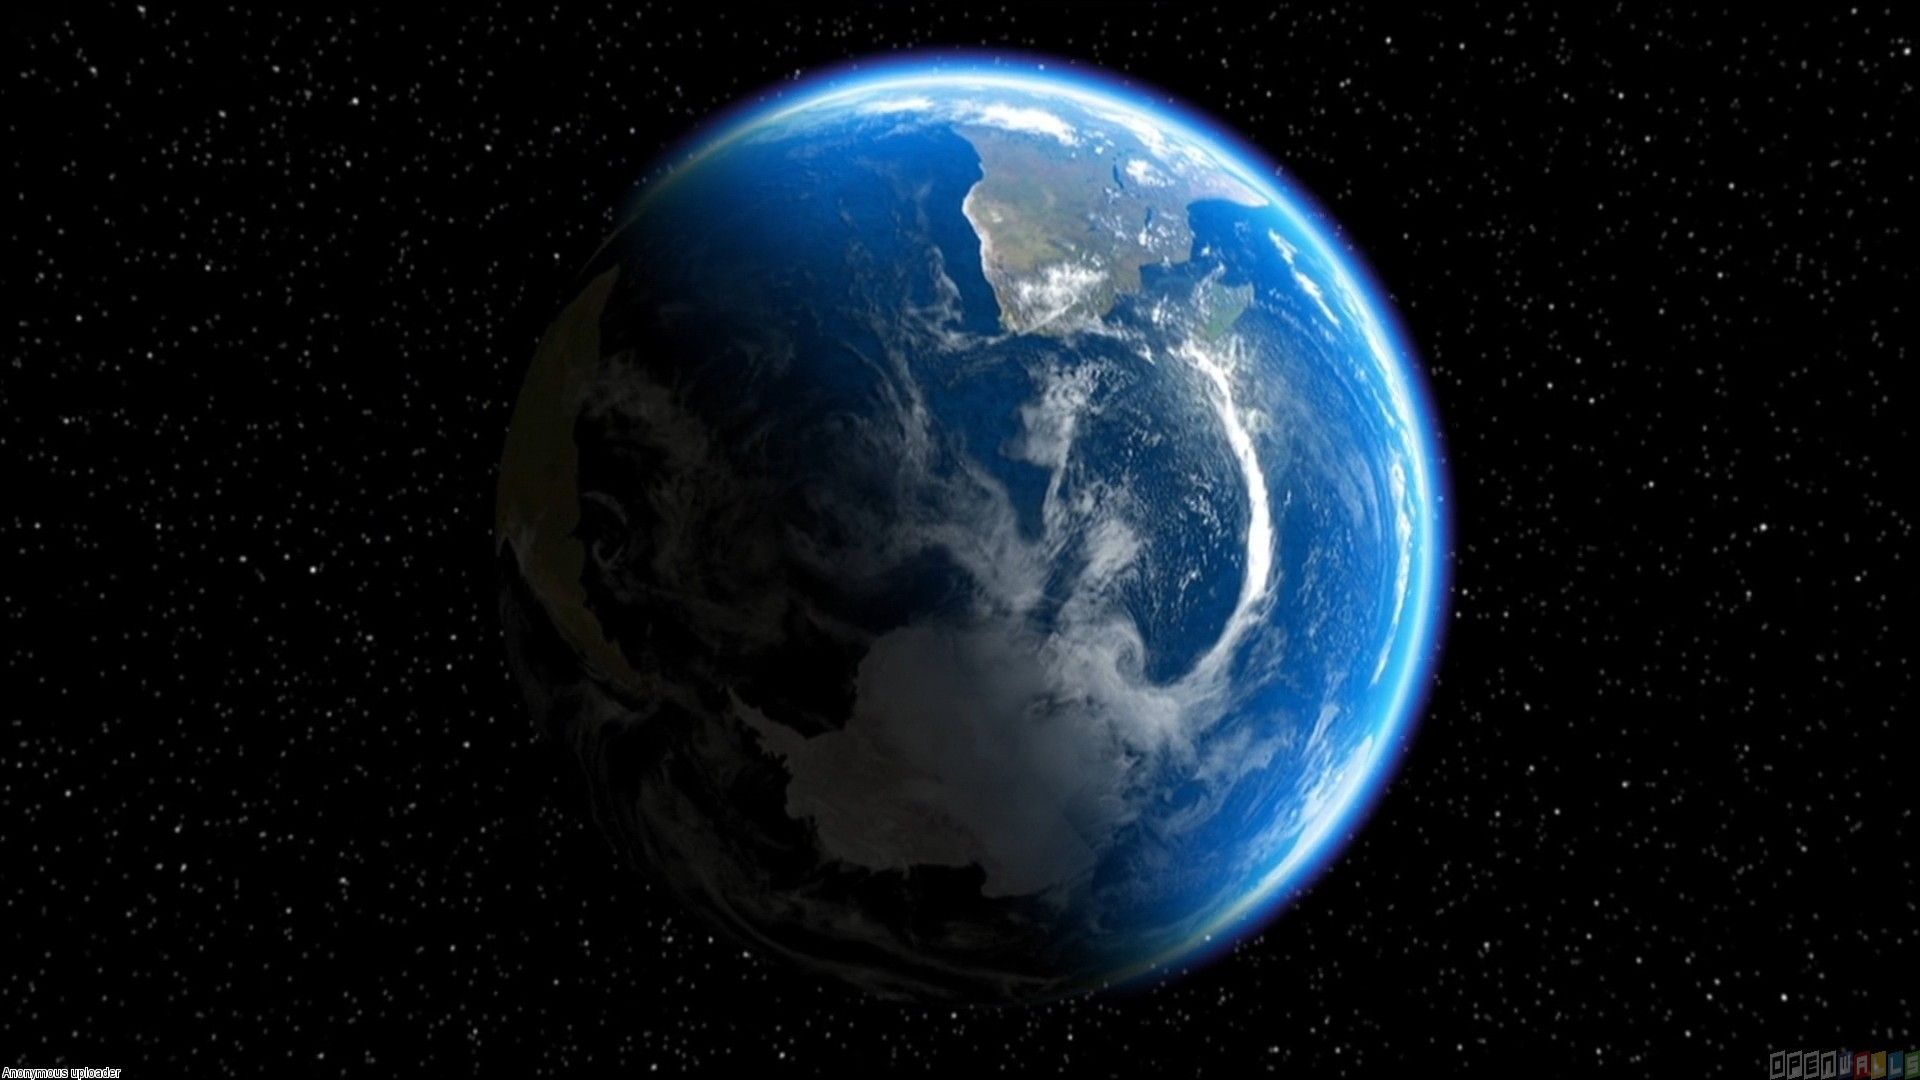 Free download Planet Earth Wallpaper 1687 HD Wallpaper in Space